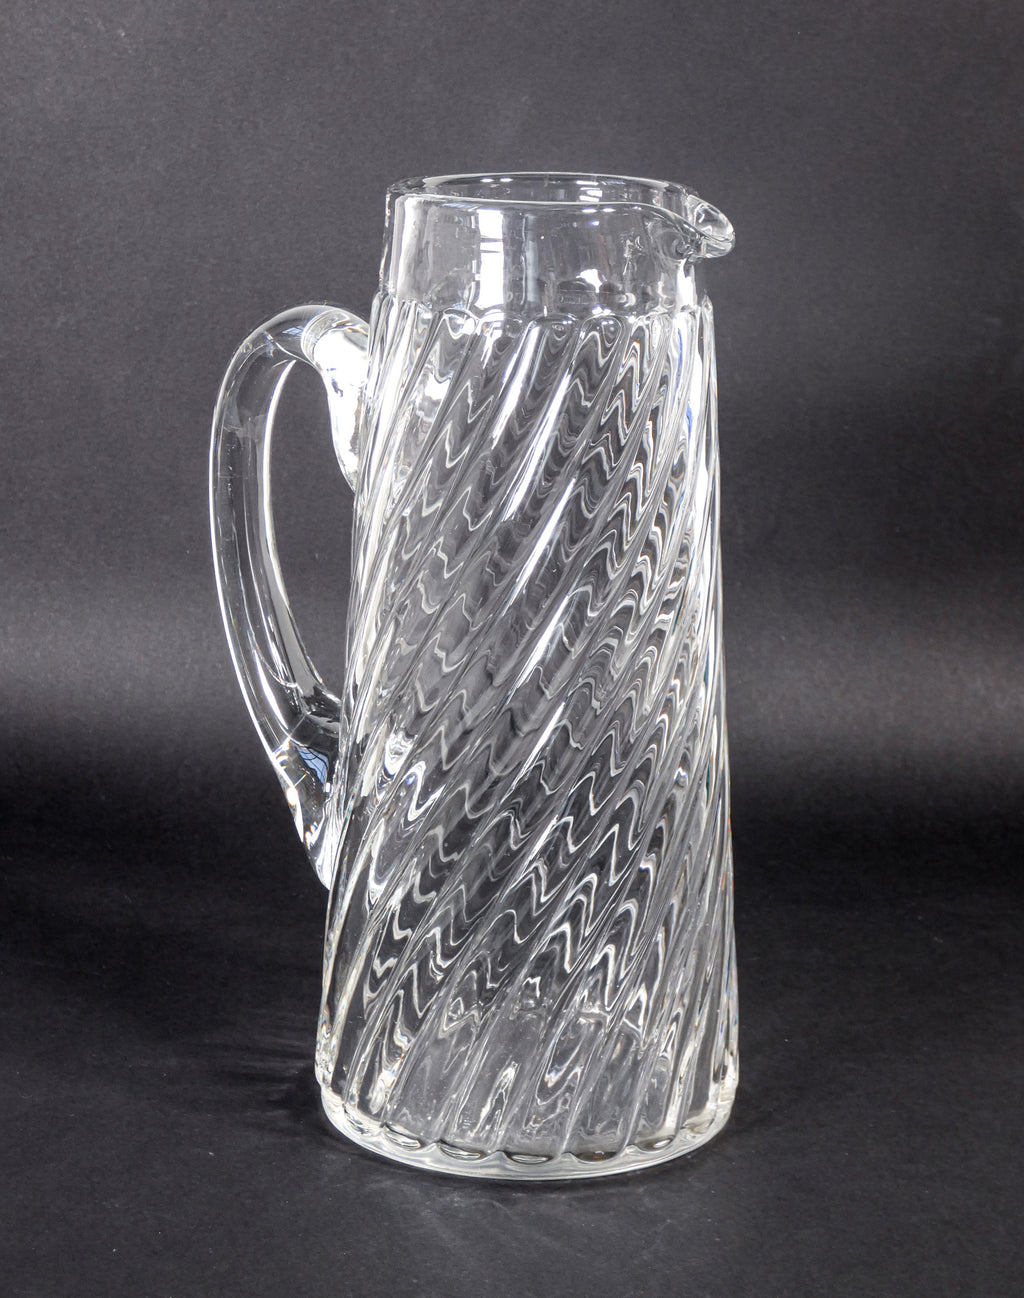 brocca vetro motivo geometrico stile art deco epoca 1950s vintage glass jug